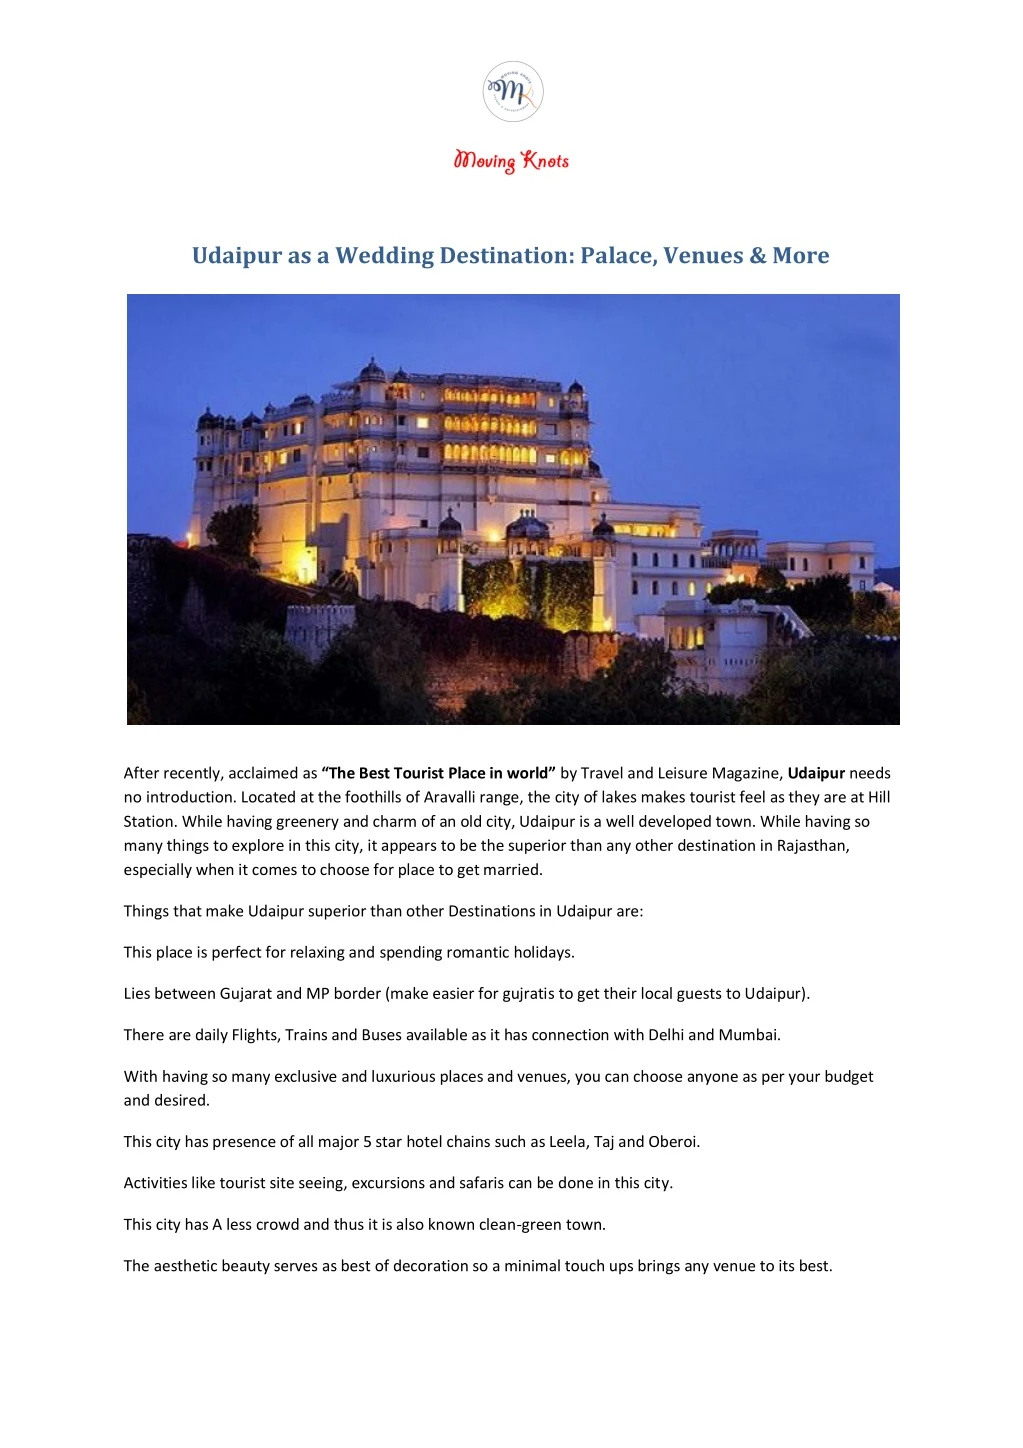 udaipur as a wedding destination palace venues